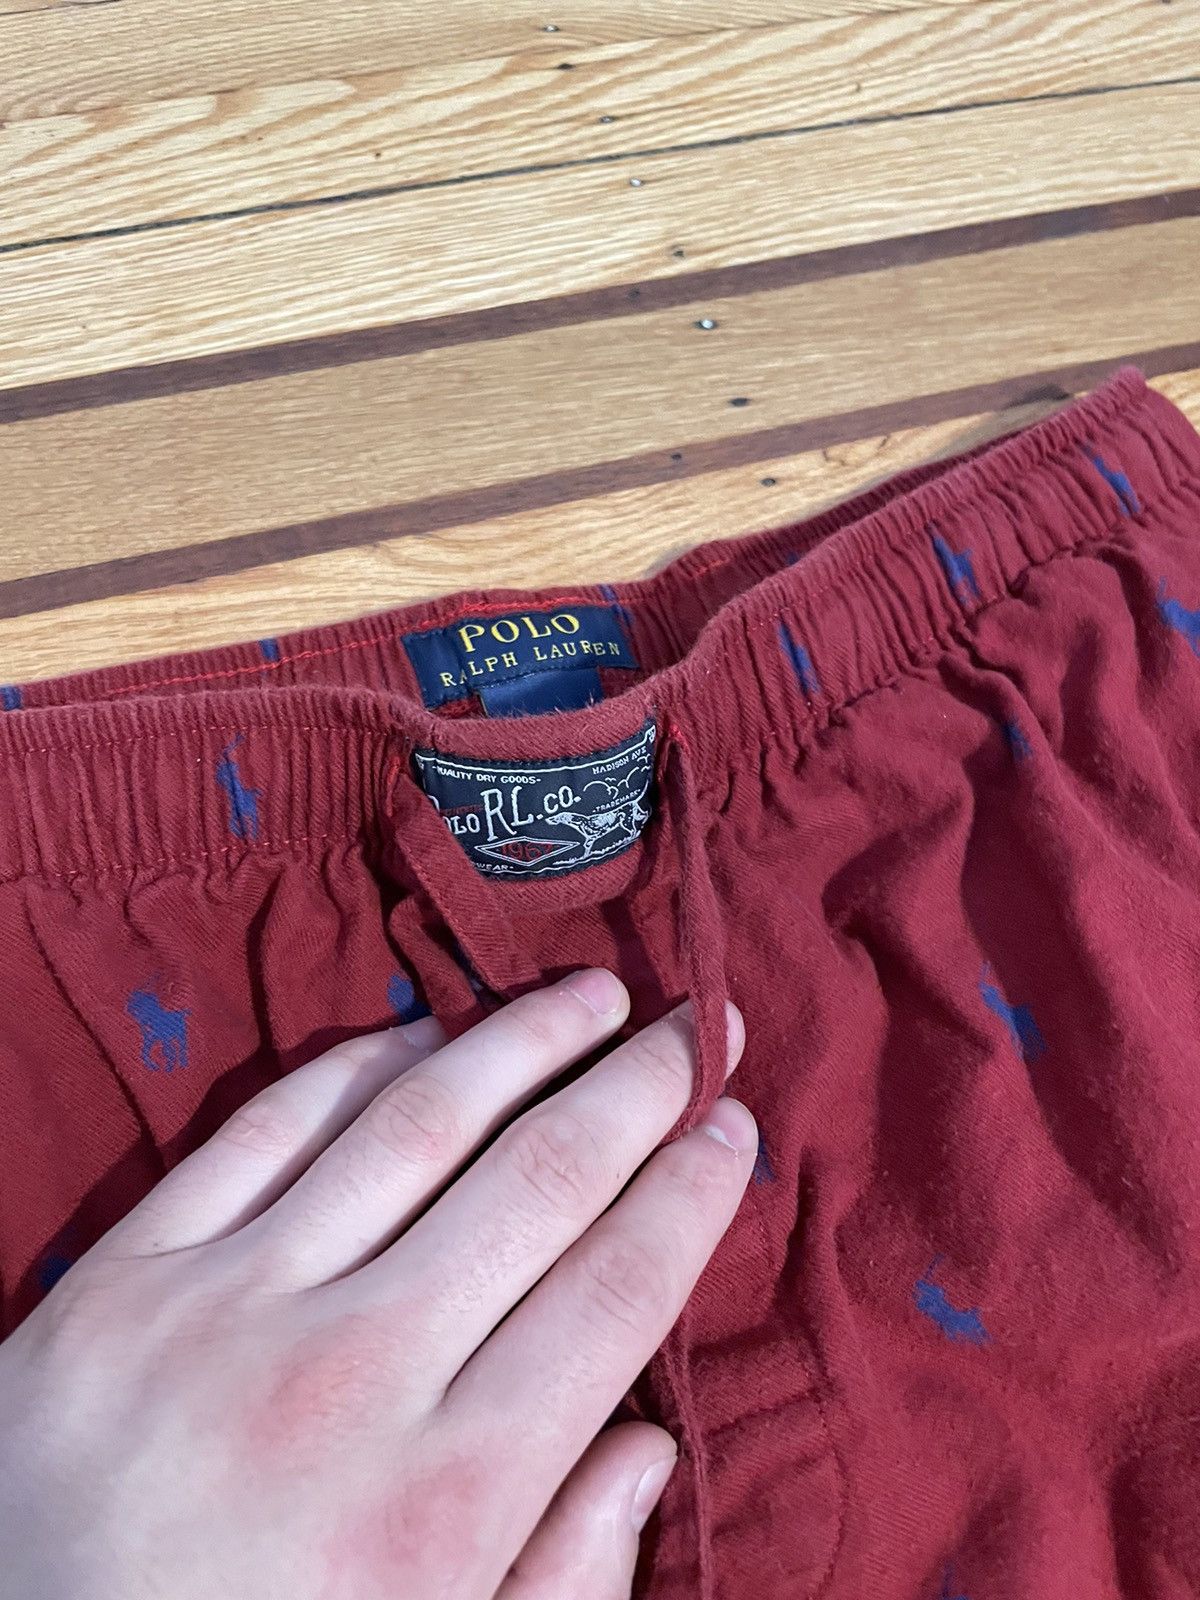 Ralph Lauren Vintage Polo Ralph Lauren Sleepwear Monogram Pants Trousers Size US 31 - 6 Thumbnail